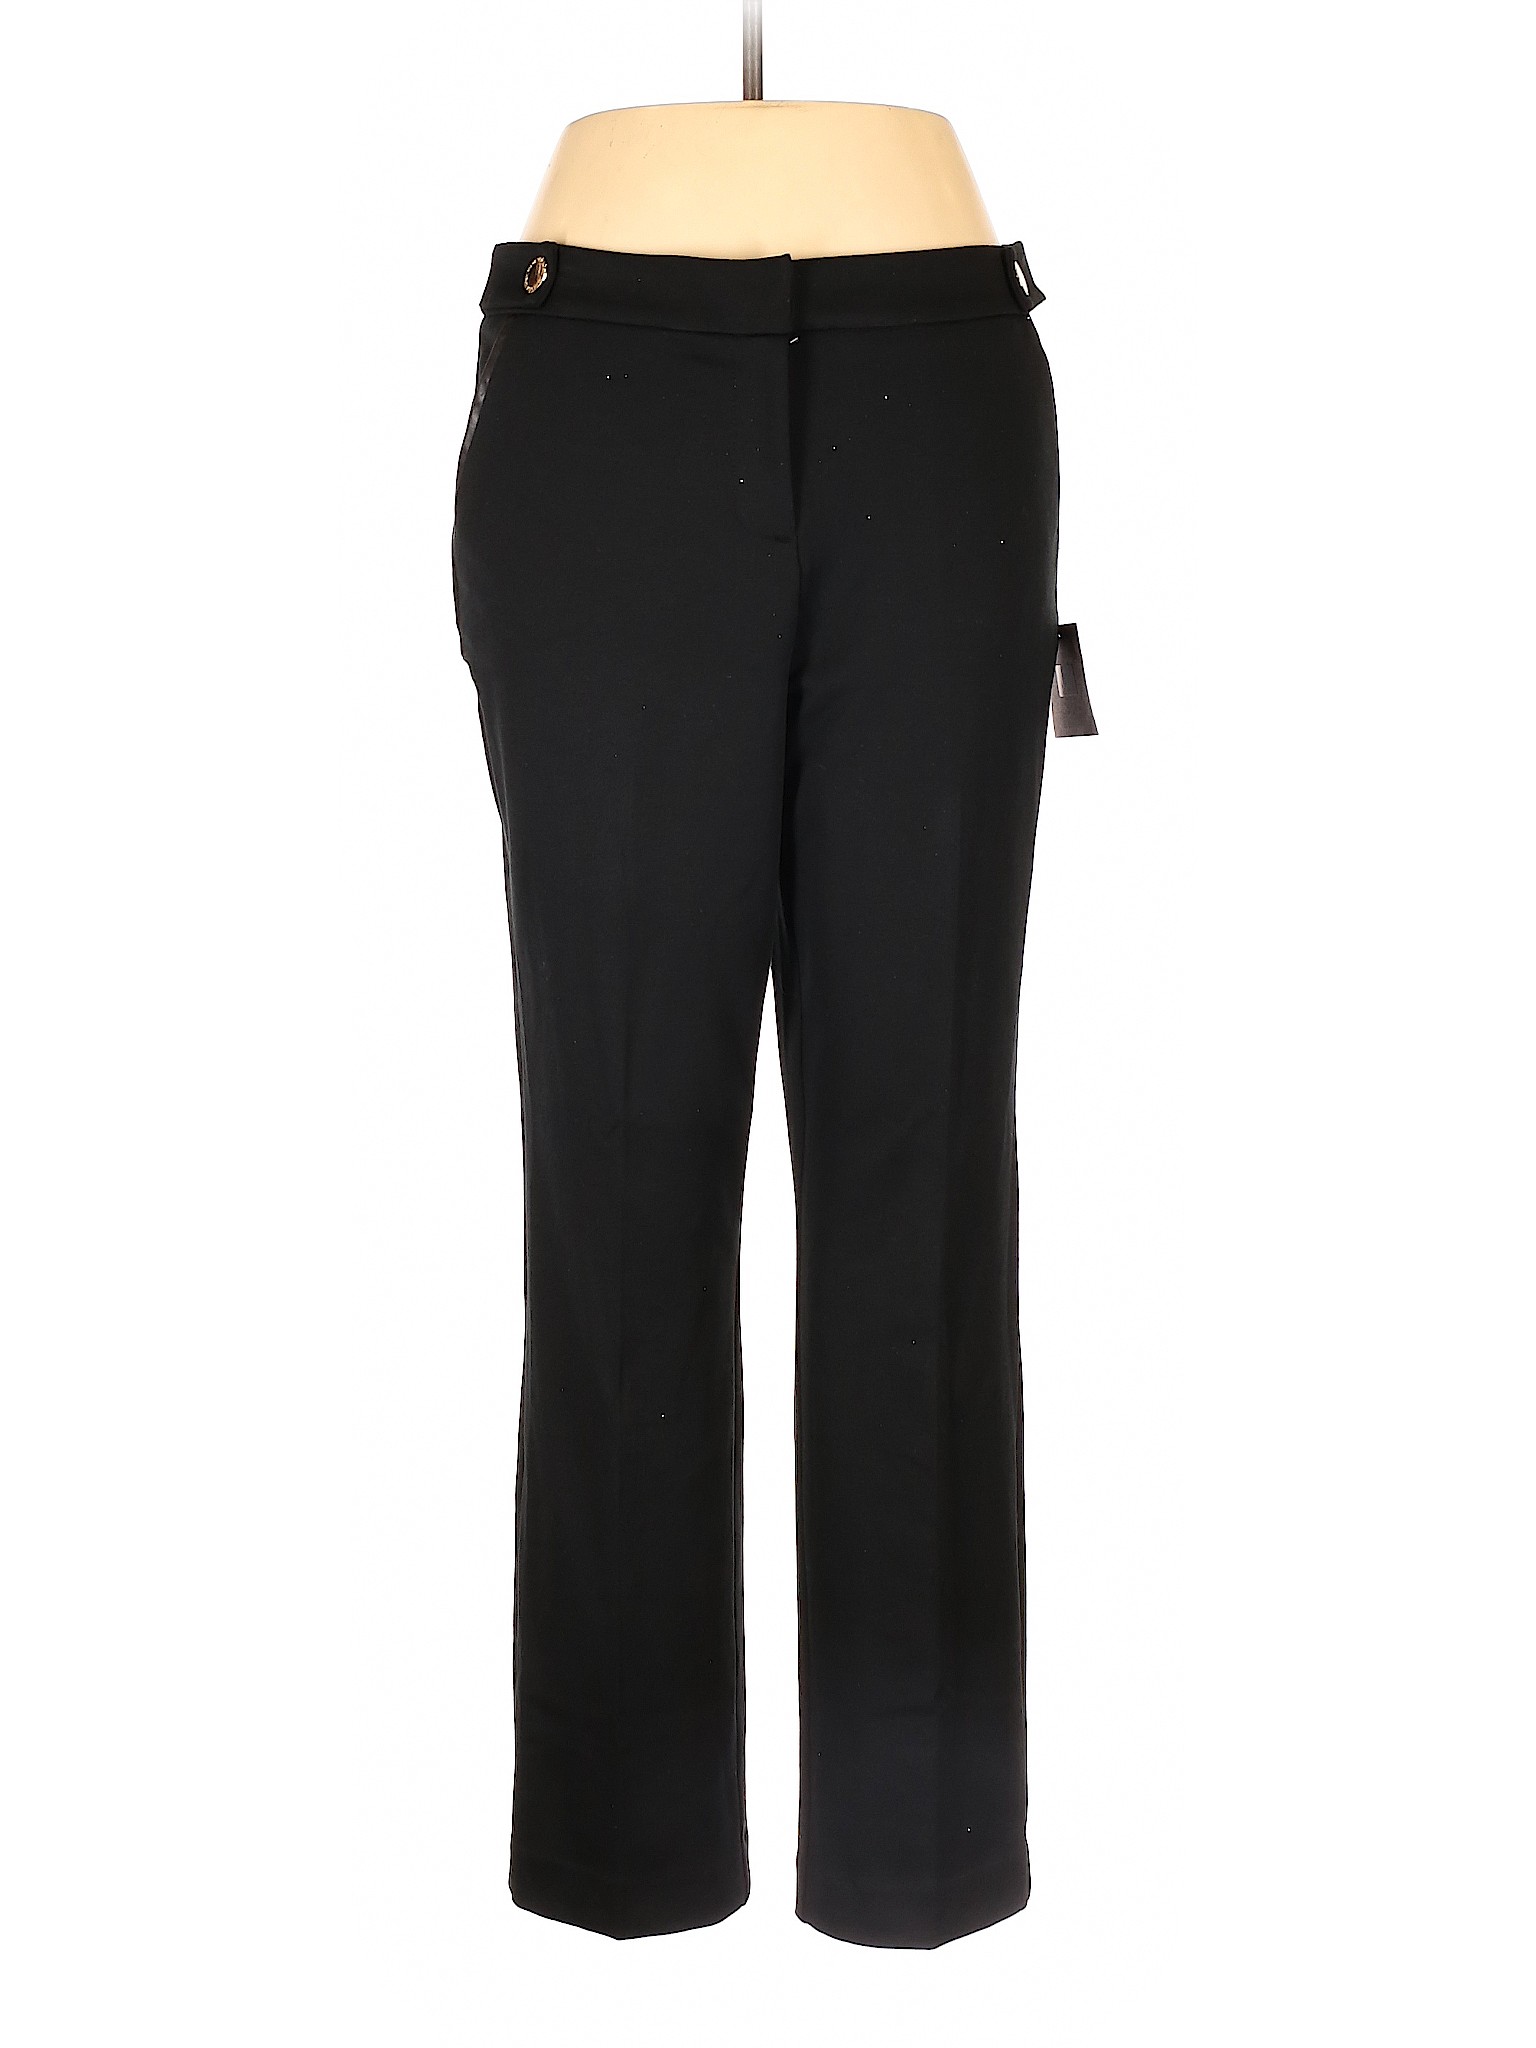 NWT Marc New York Women Black Dress Pants 12 | eBay